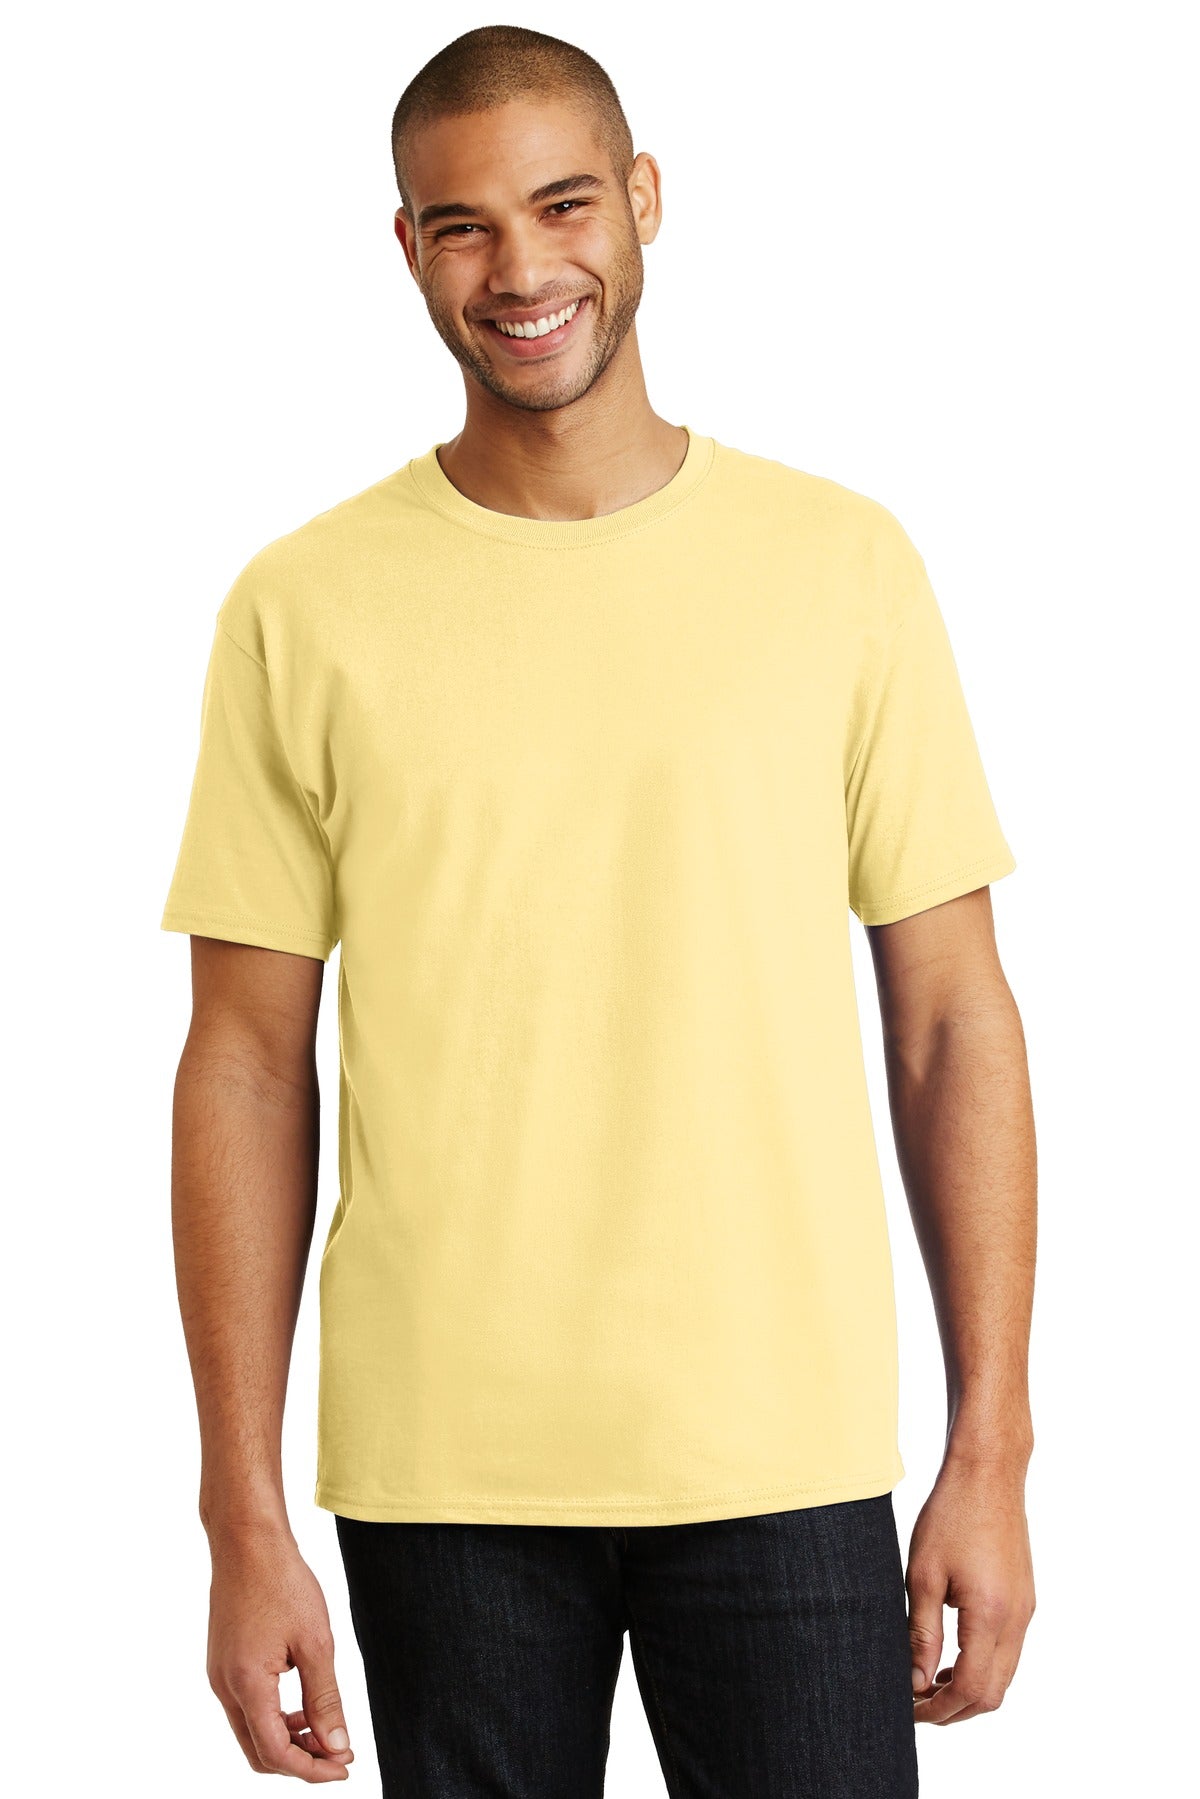 T-Shirts Daffodil Yellow Hanes